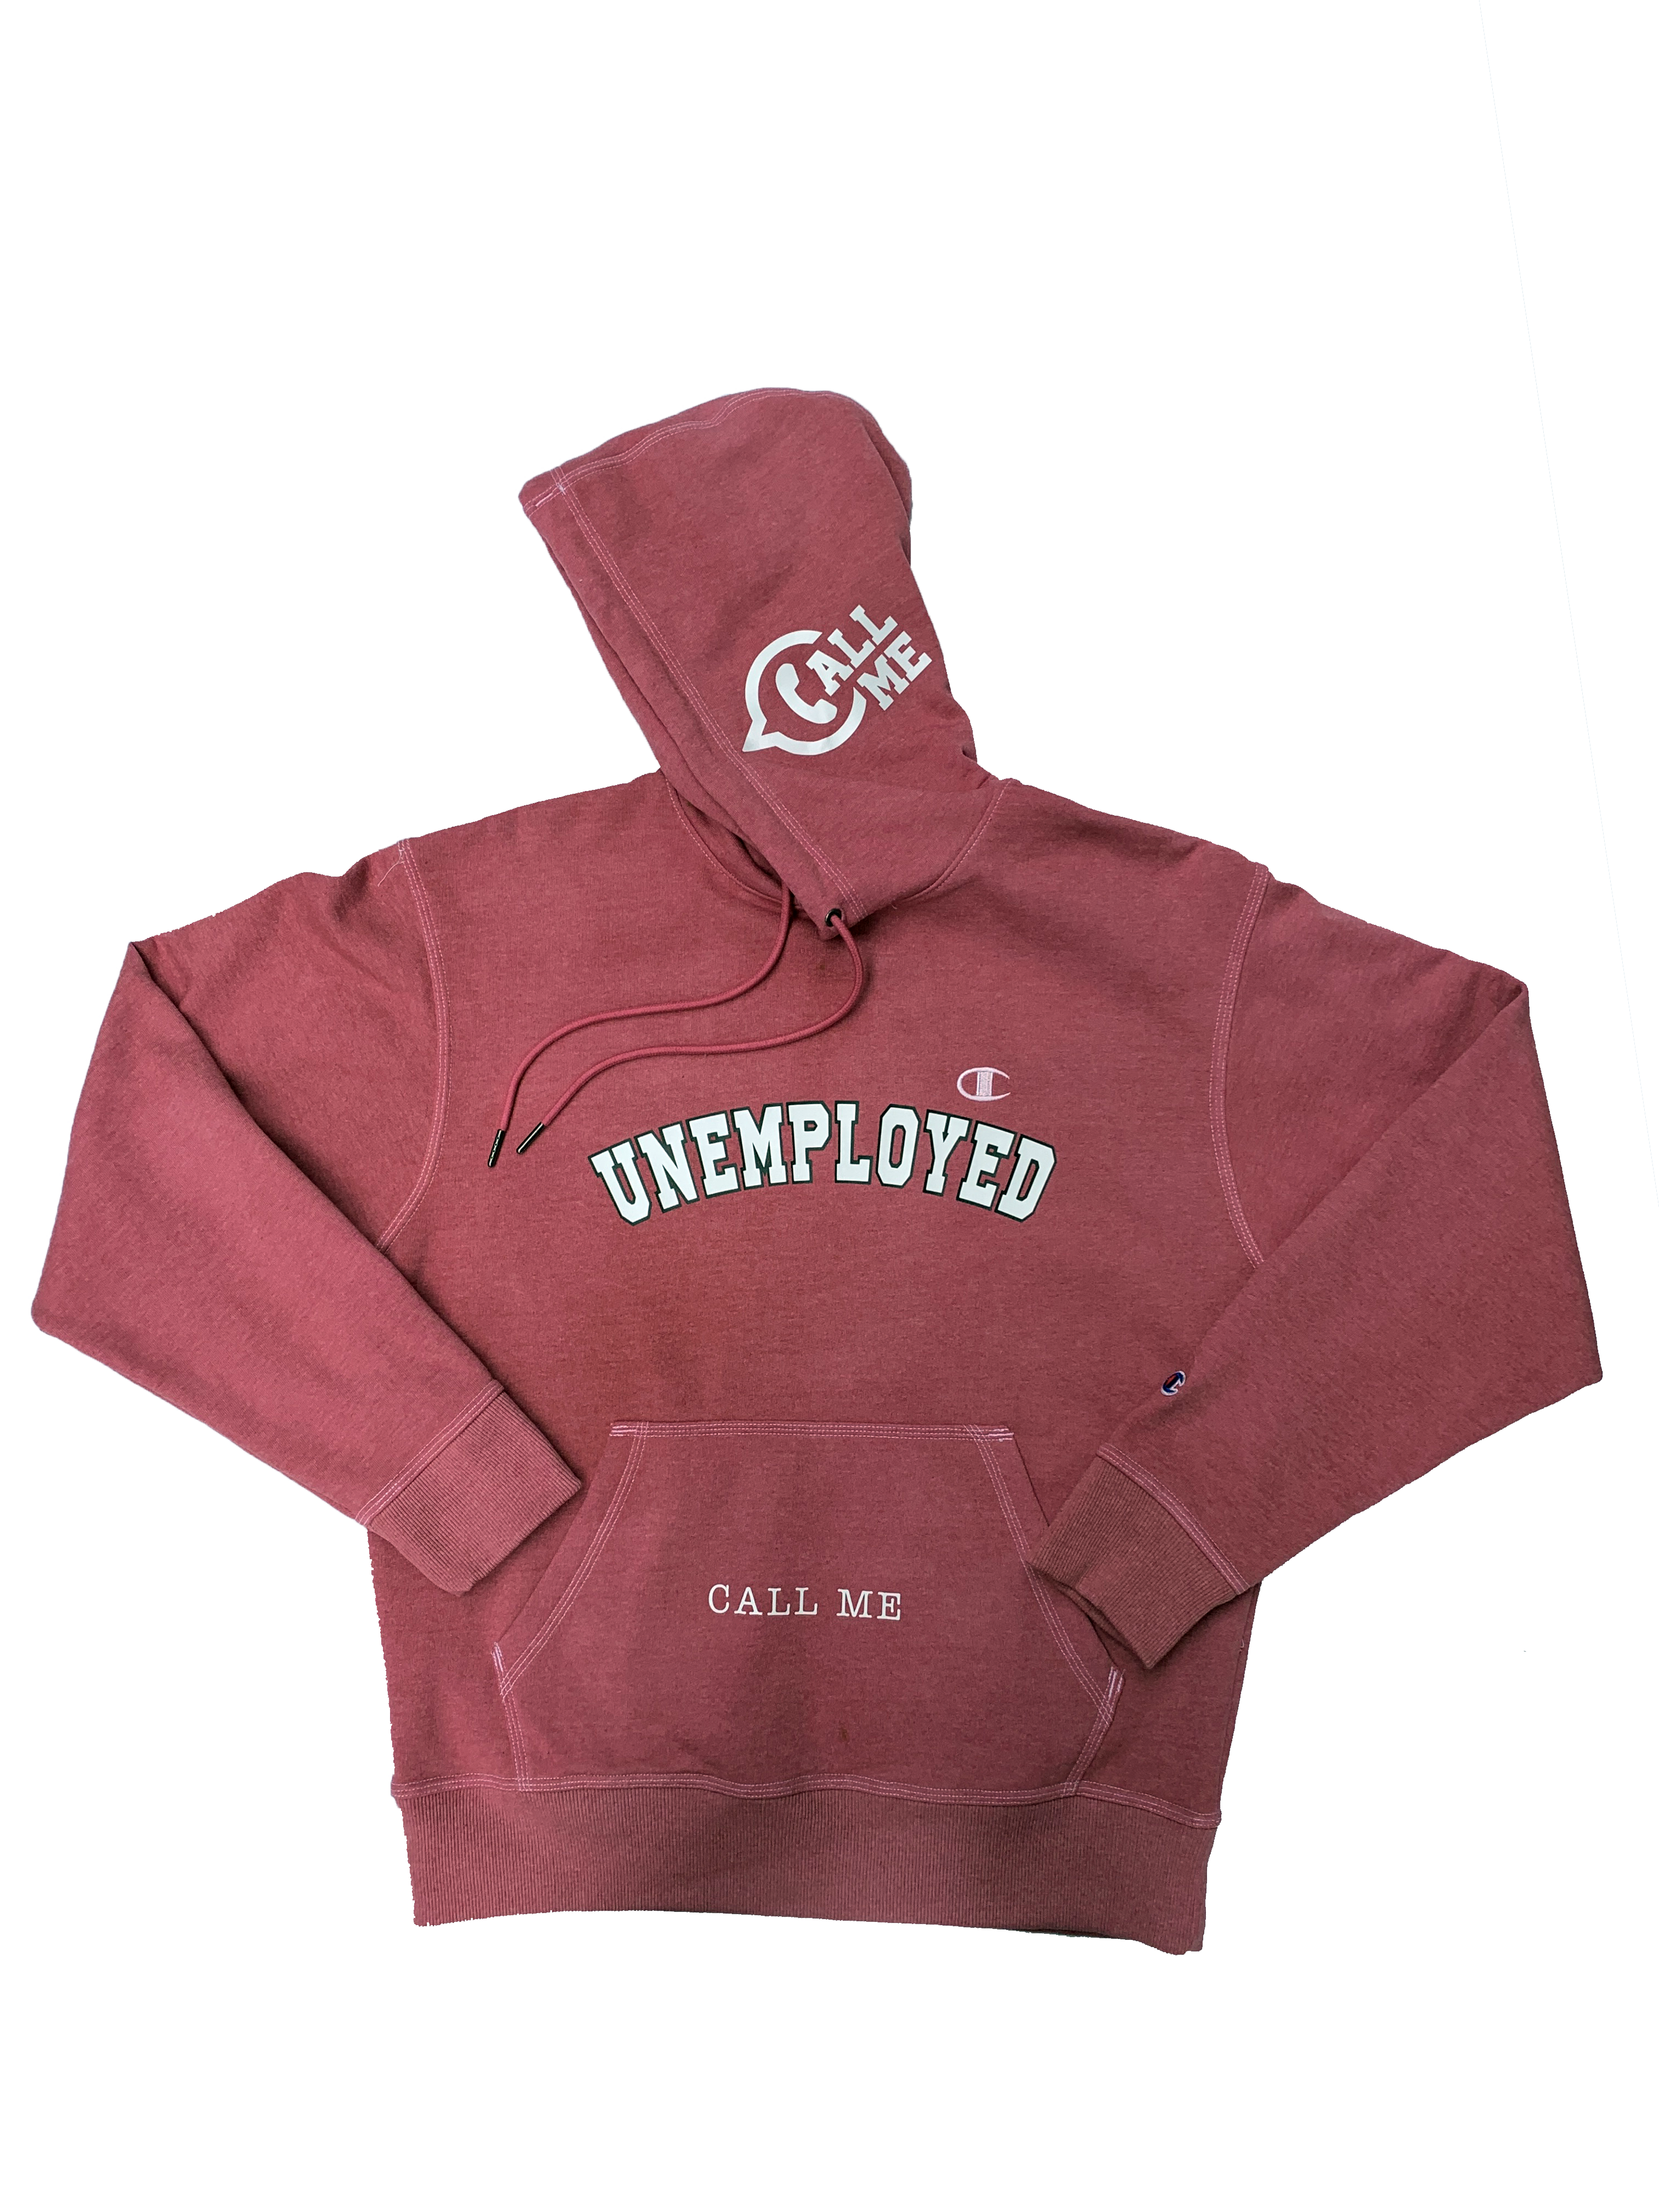 wine red champion hoodie